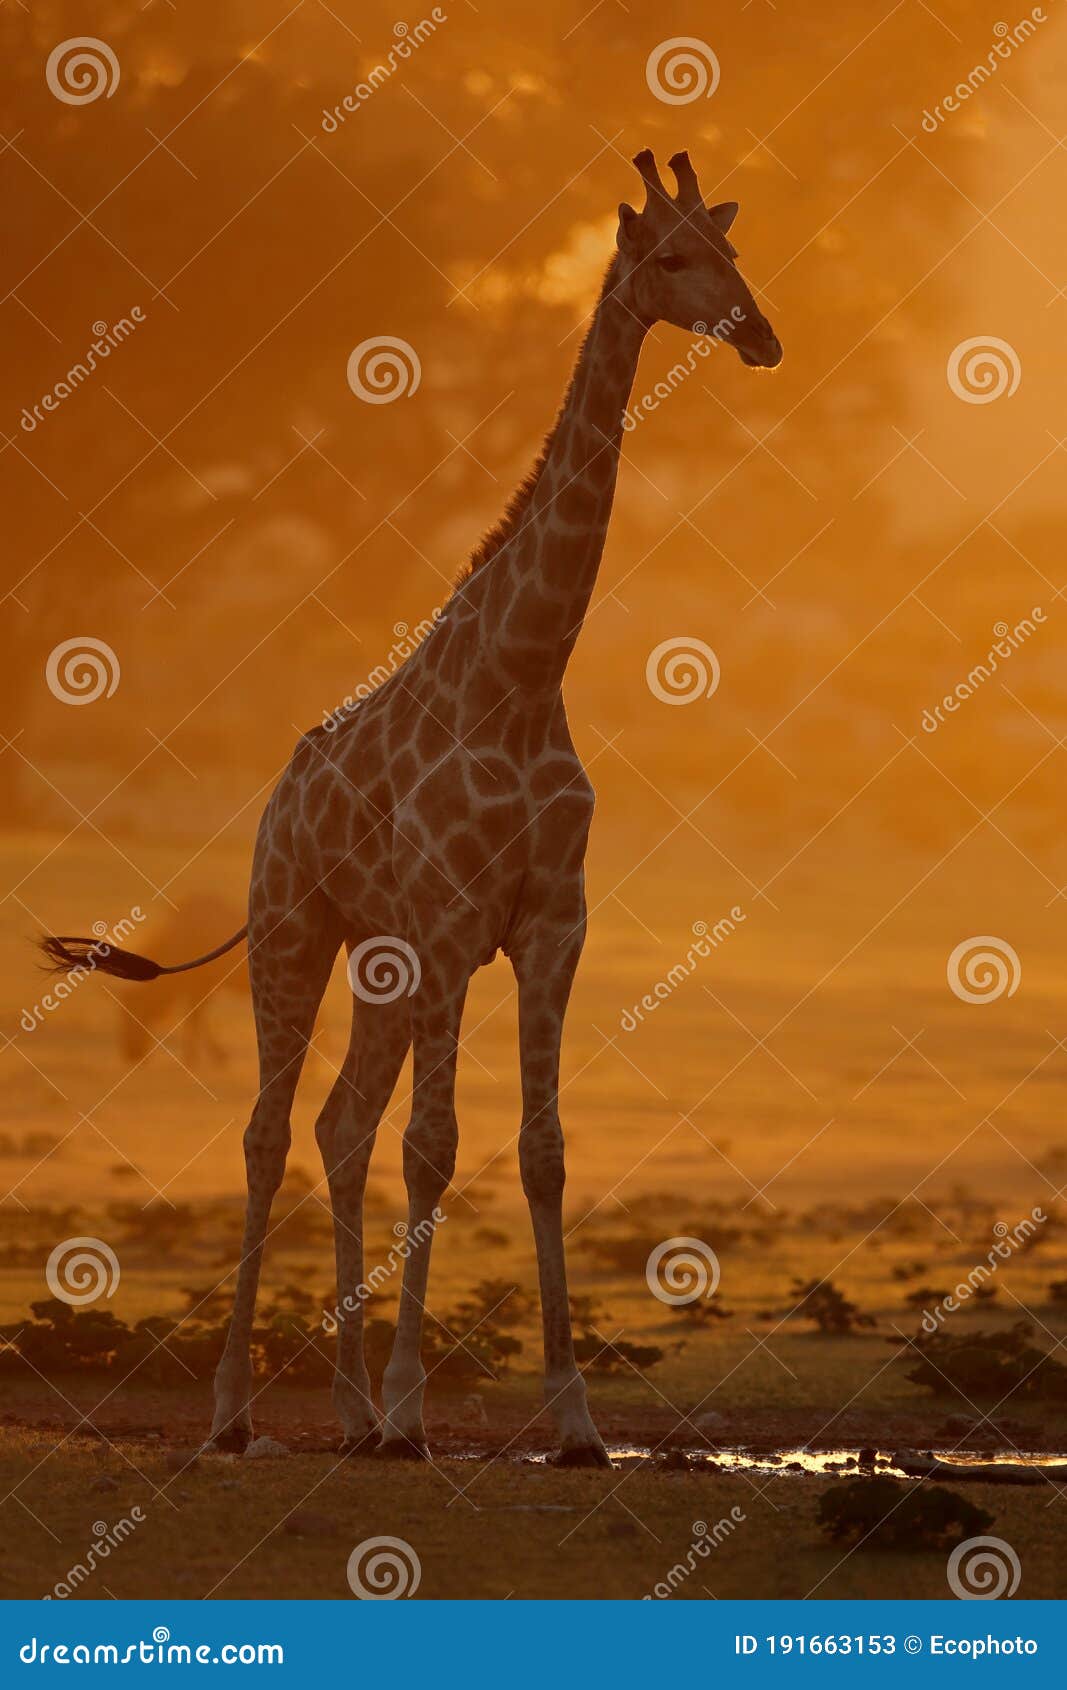 Giraffe at sunrise - Kalahari desert. A giraffe Giraffa camelopardalis in dust at sunrise, Kalahari desert, South Africa